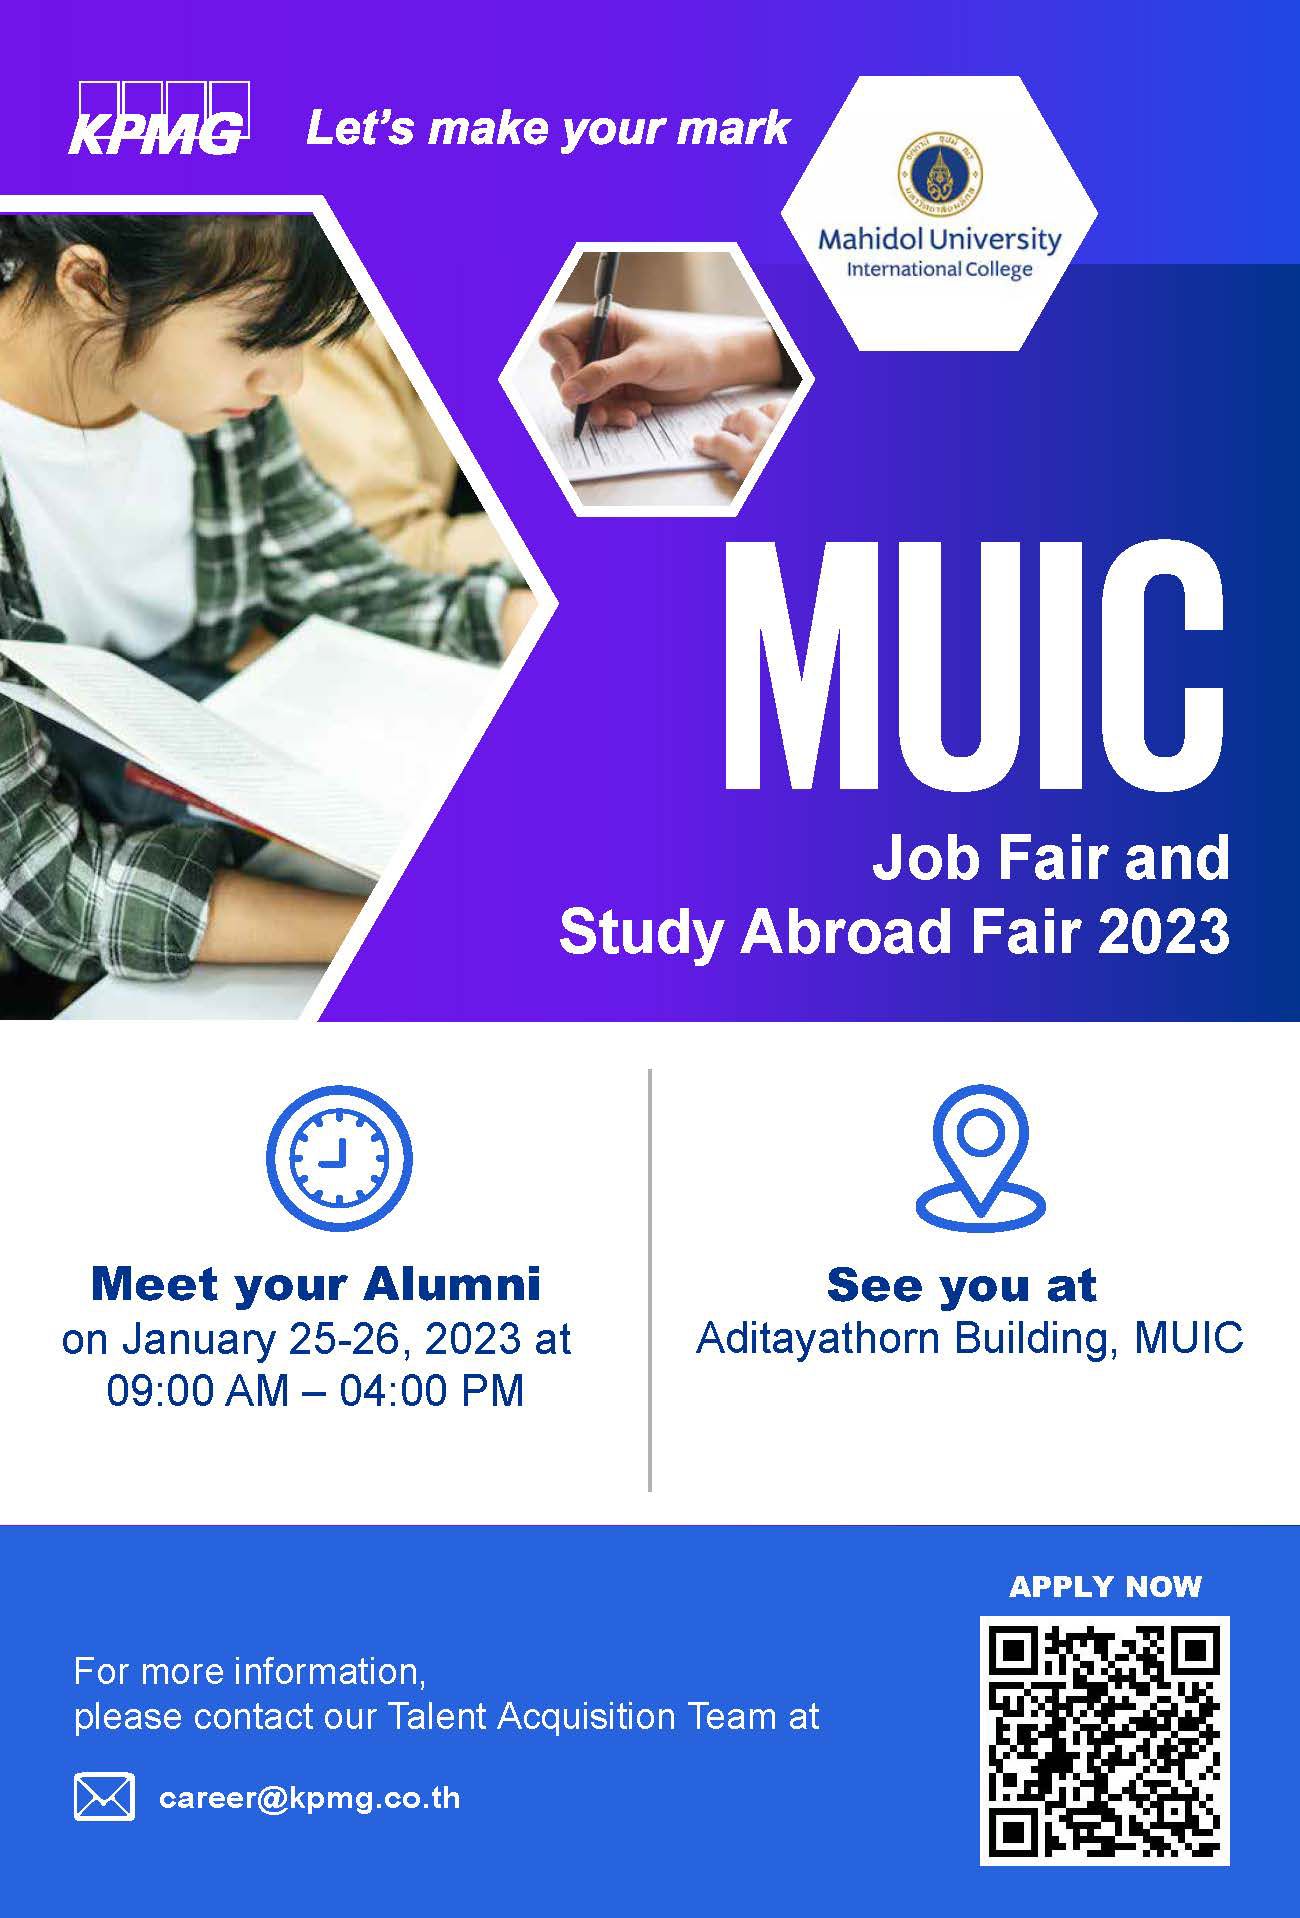 MUIC Job Fair and Study Abroad Fair 2023